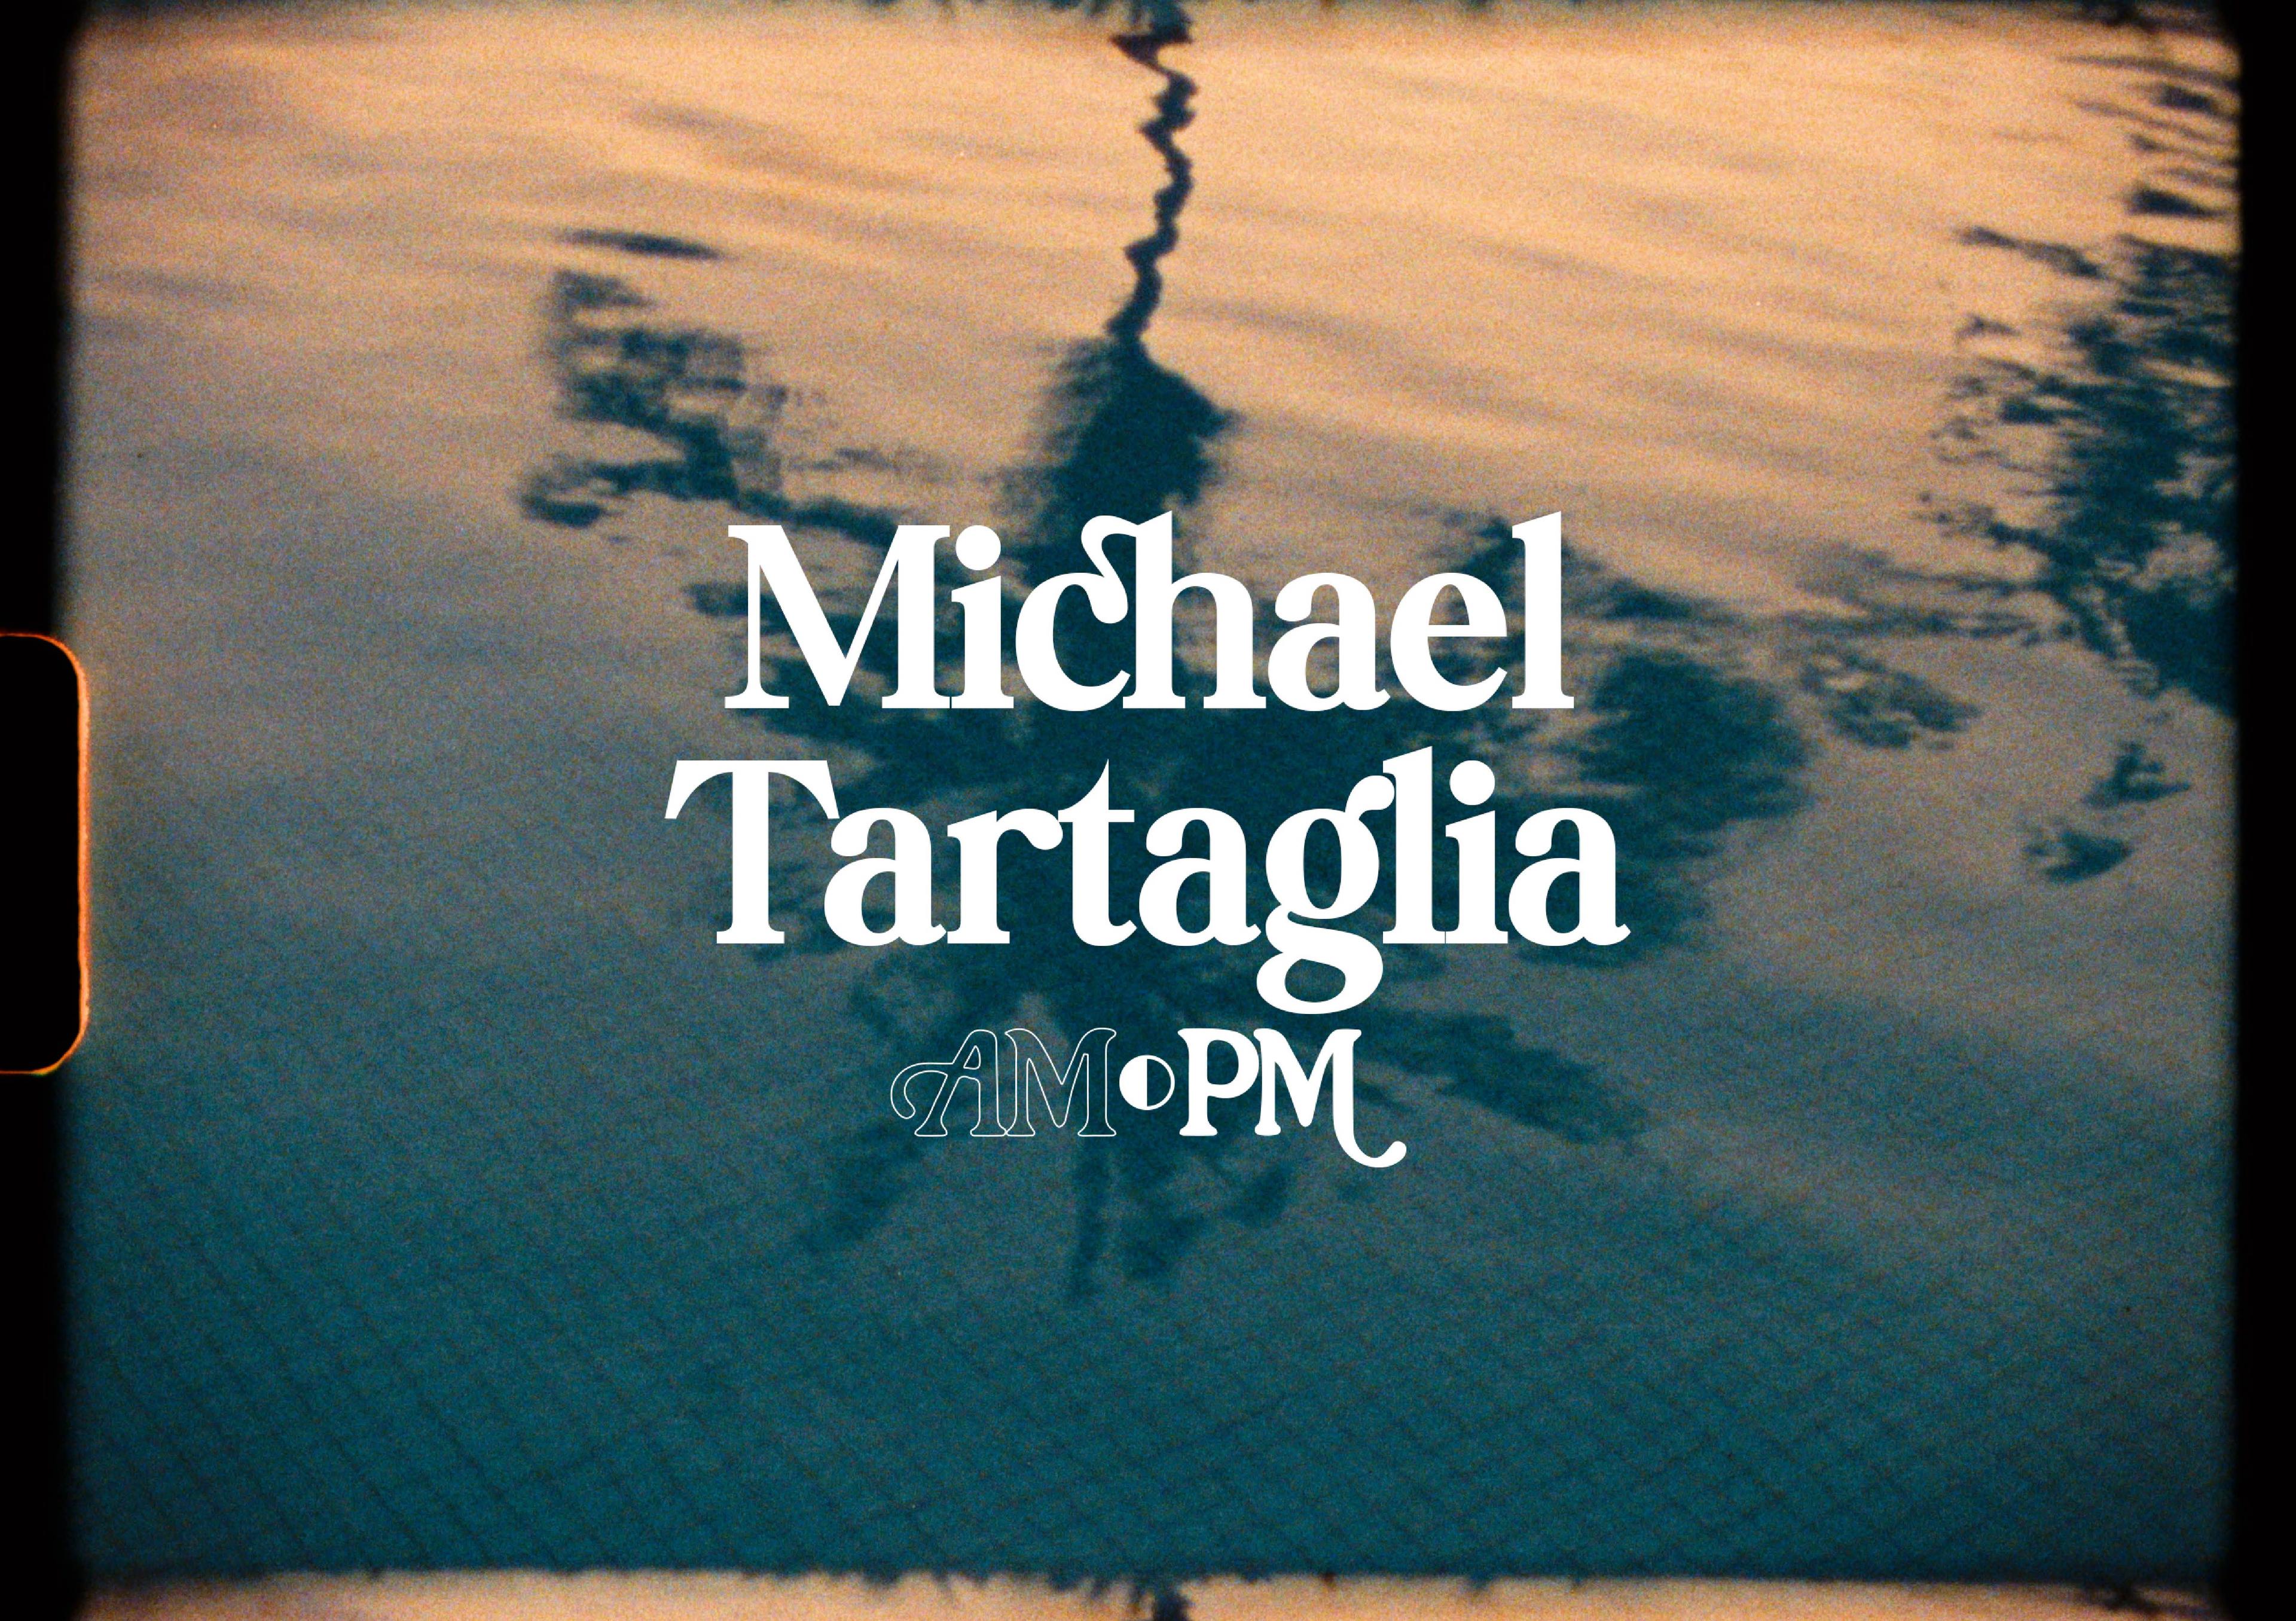 AM/PM: Michael Tartaglia